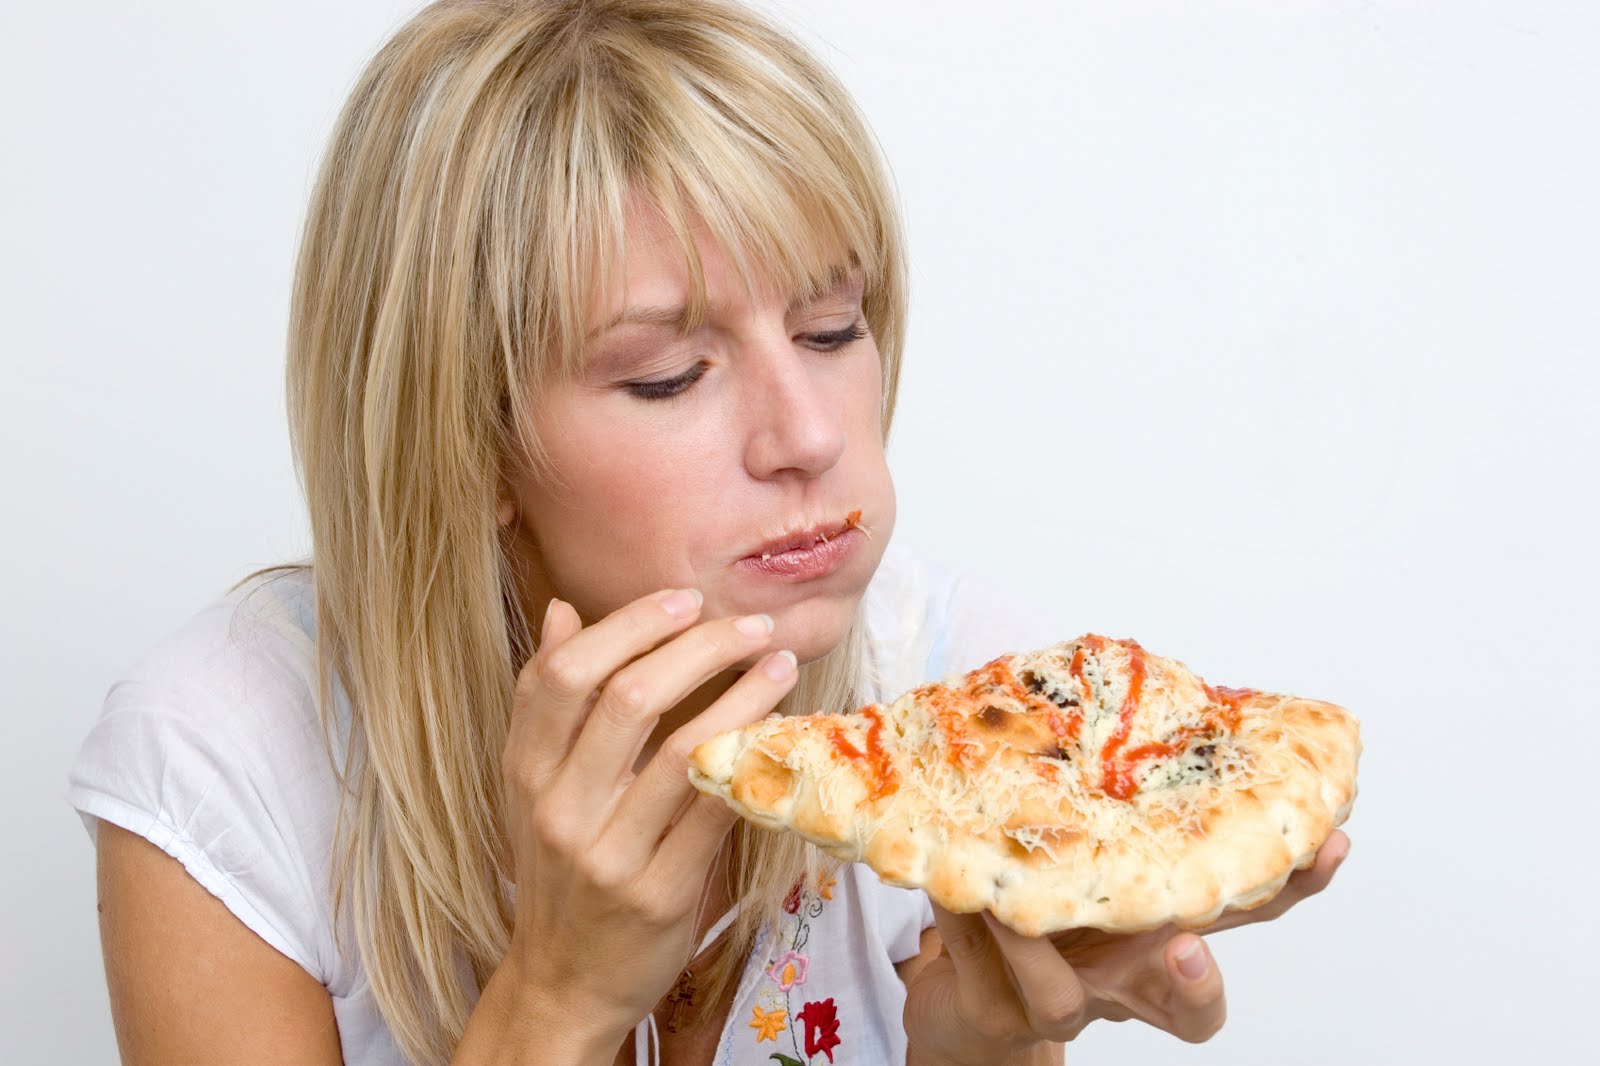 woman-pizza